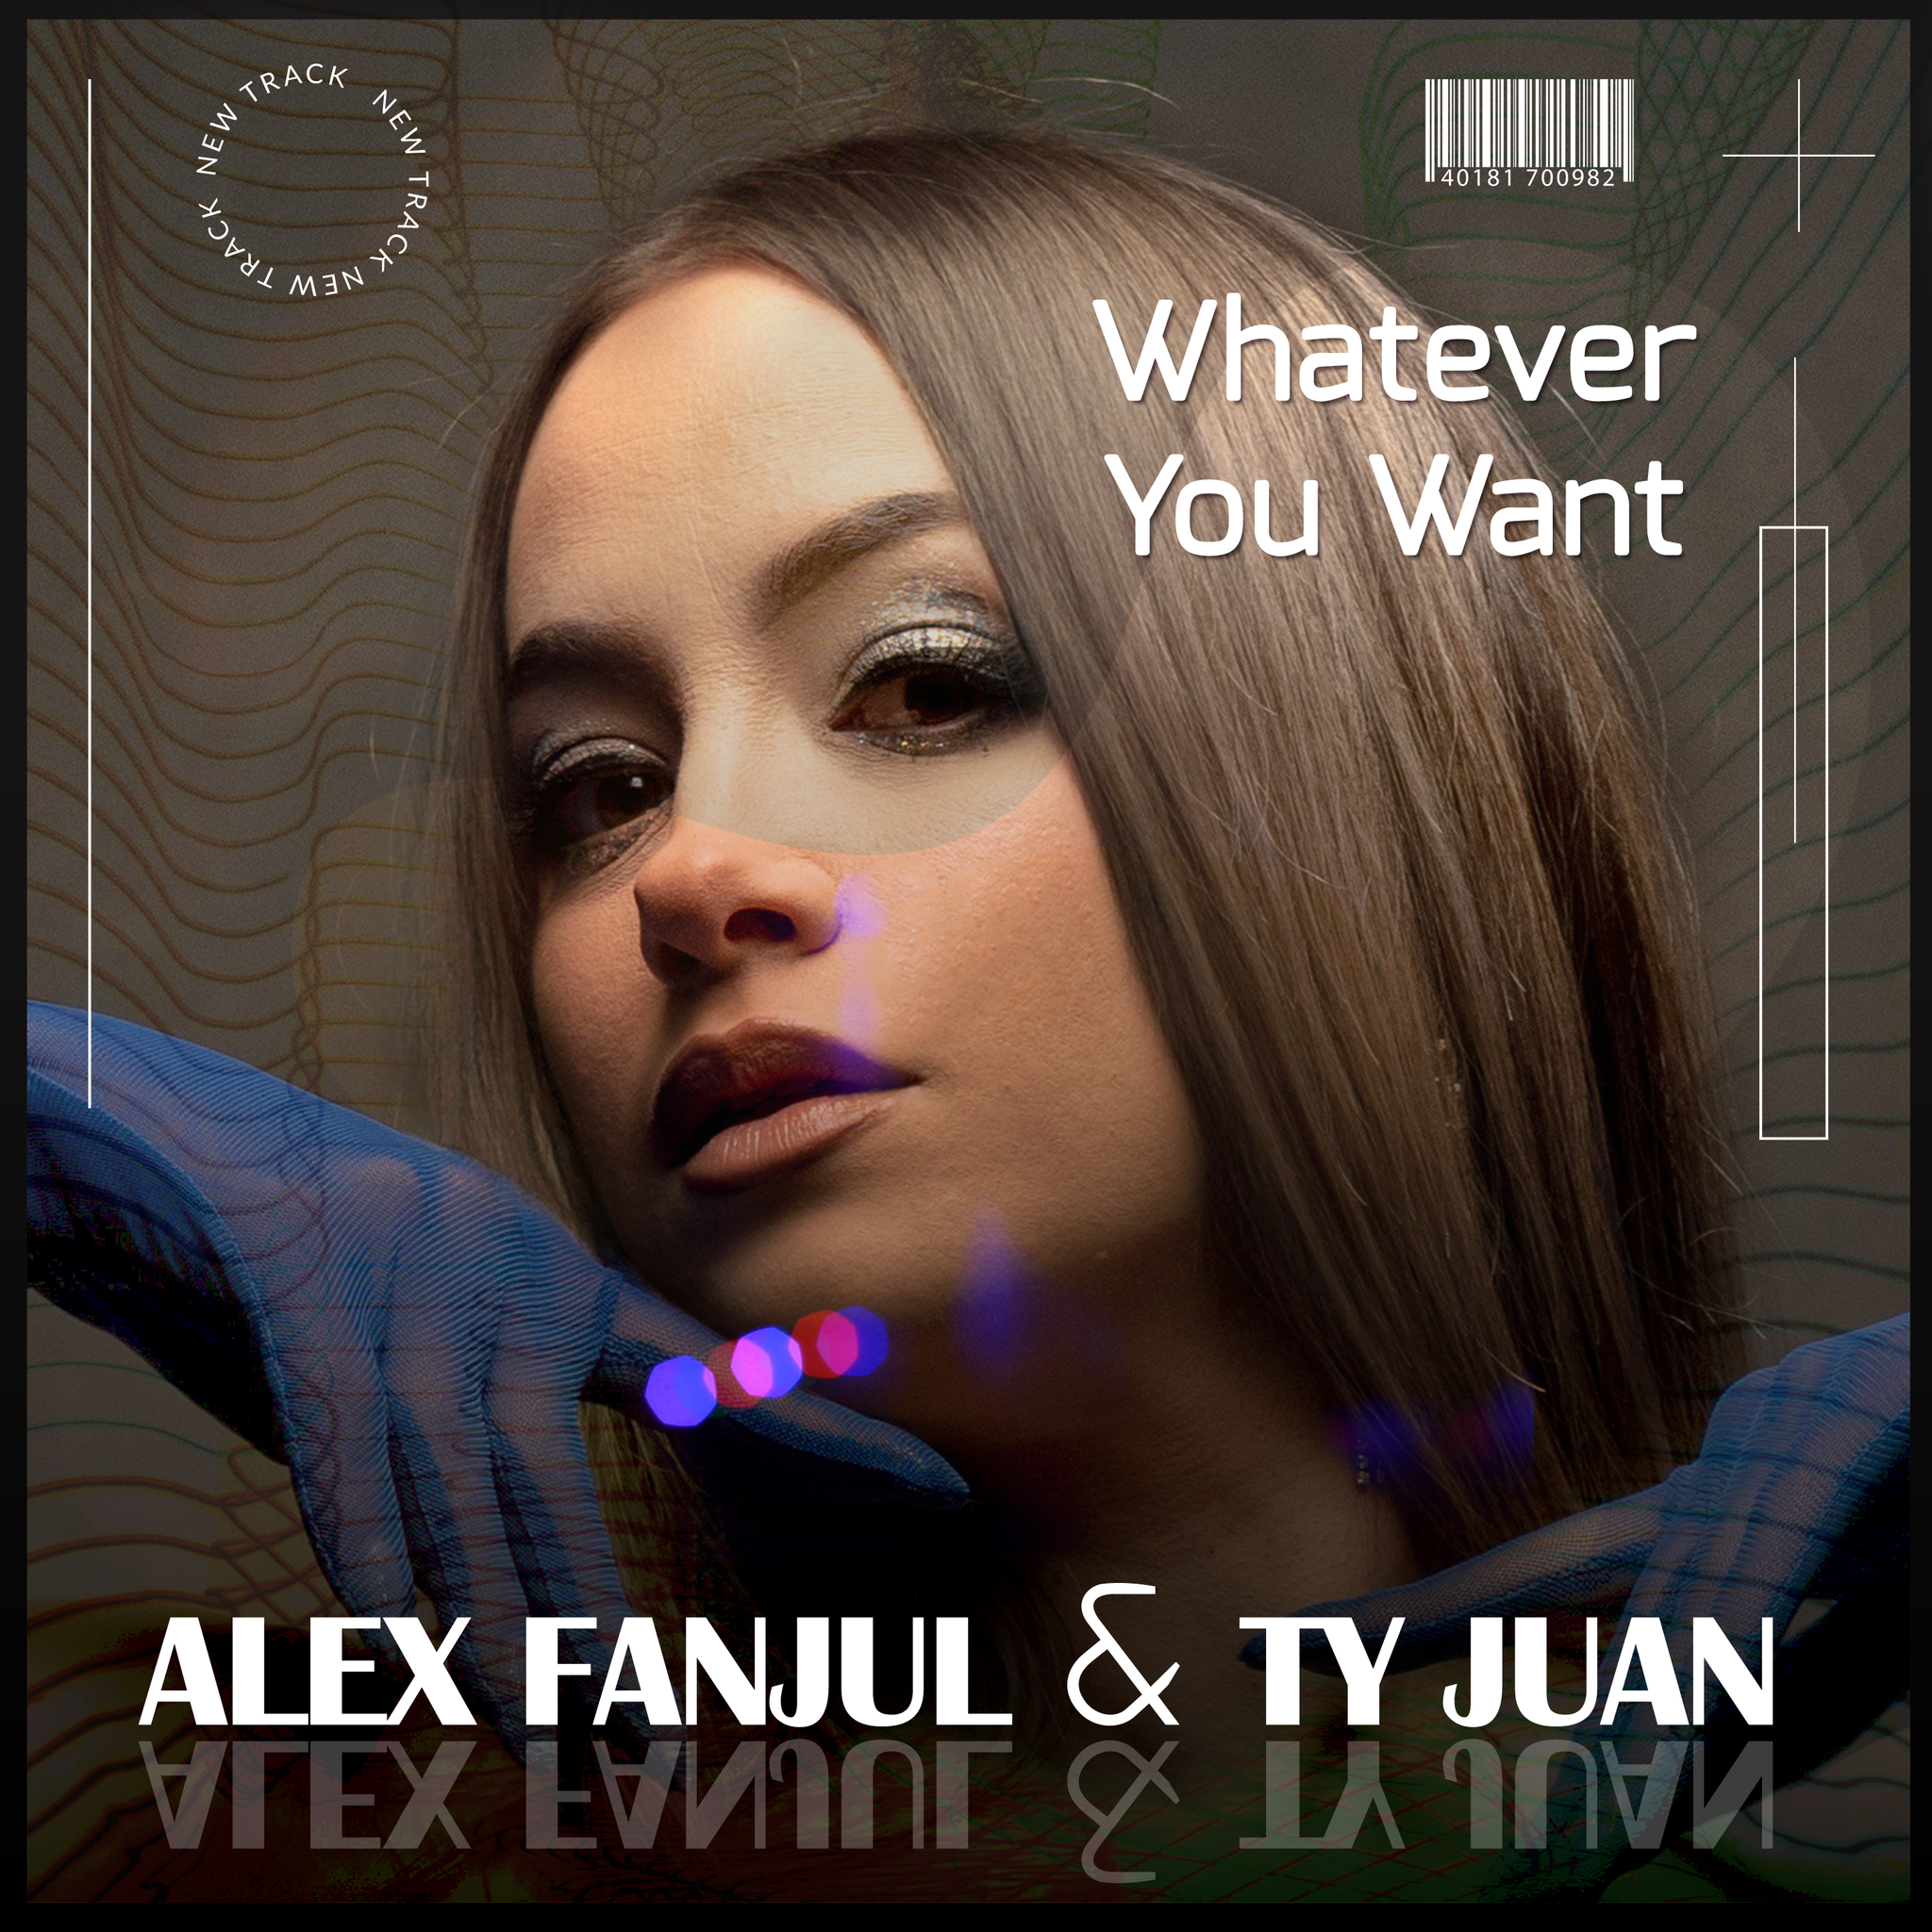 Alex Fanjul & Ty Juan - Whatever you want